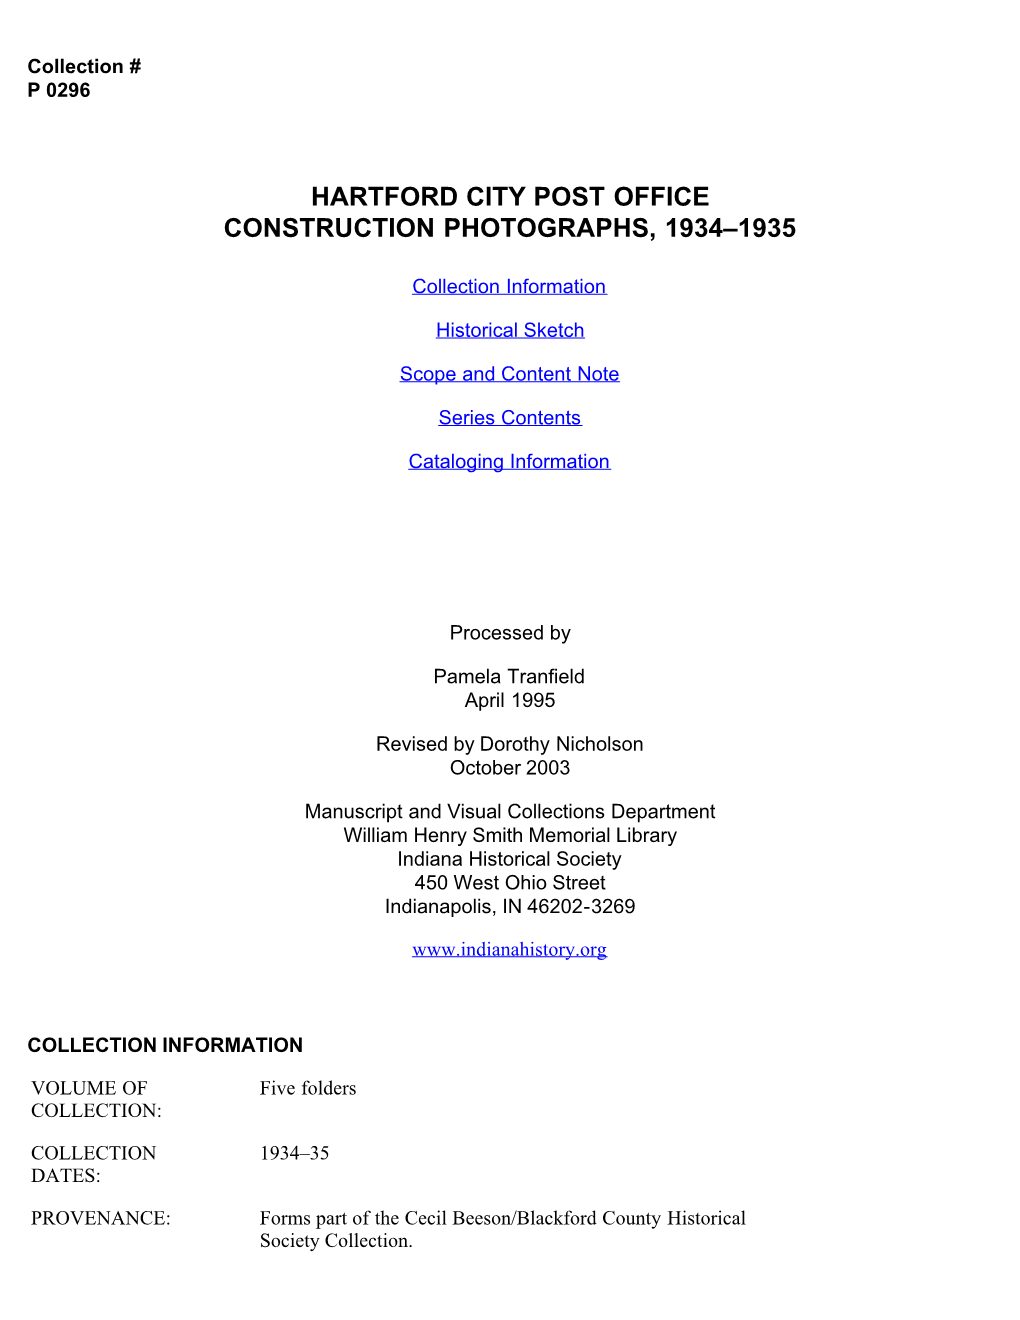 Hartford City Post Office Construction Photos, 1934-35